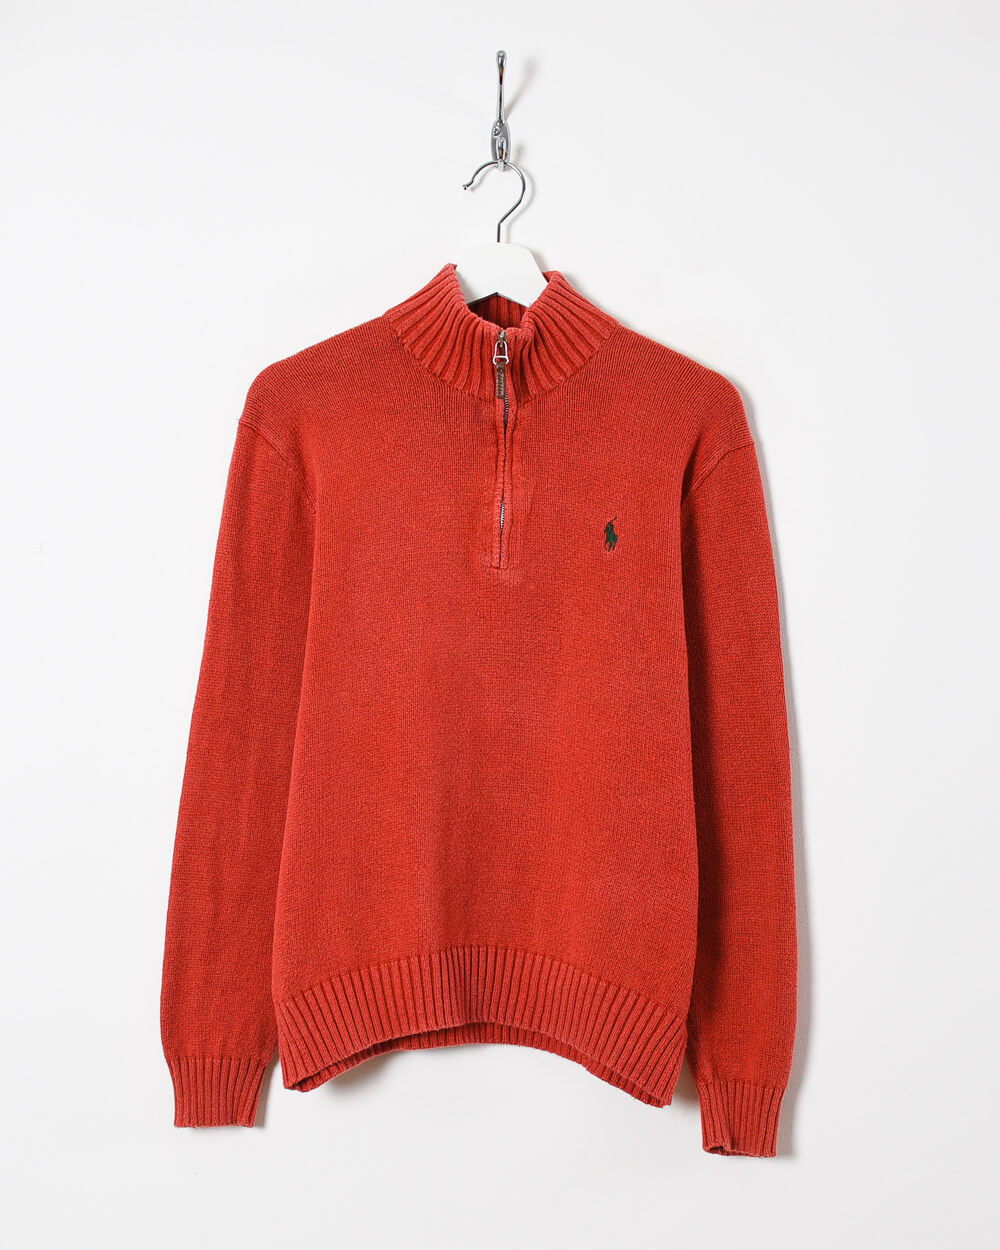 Ralph Lauren Women's 1/4 Zip Knitted Sweatshirt - Large - Domno Vintage 90s, 80s, 00s Retro and Vintage Clothing 